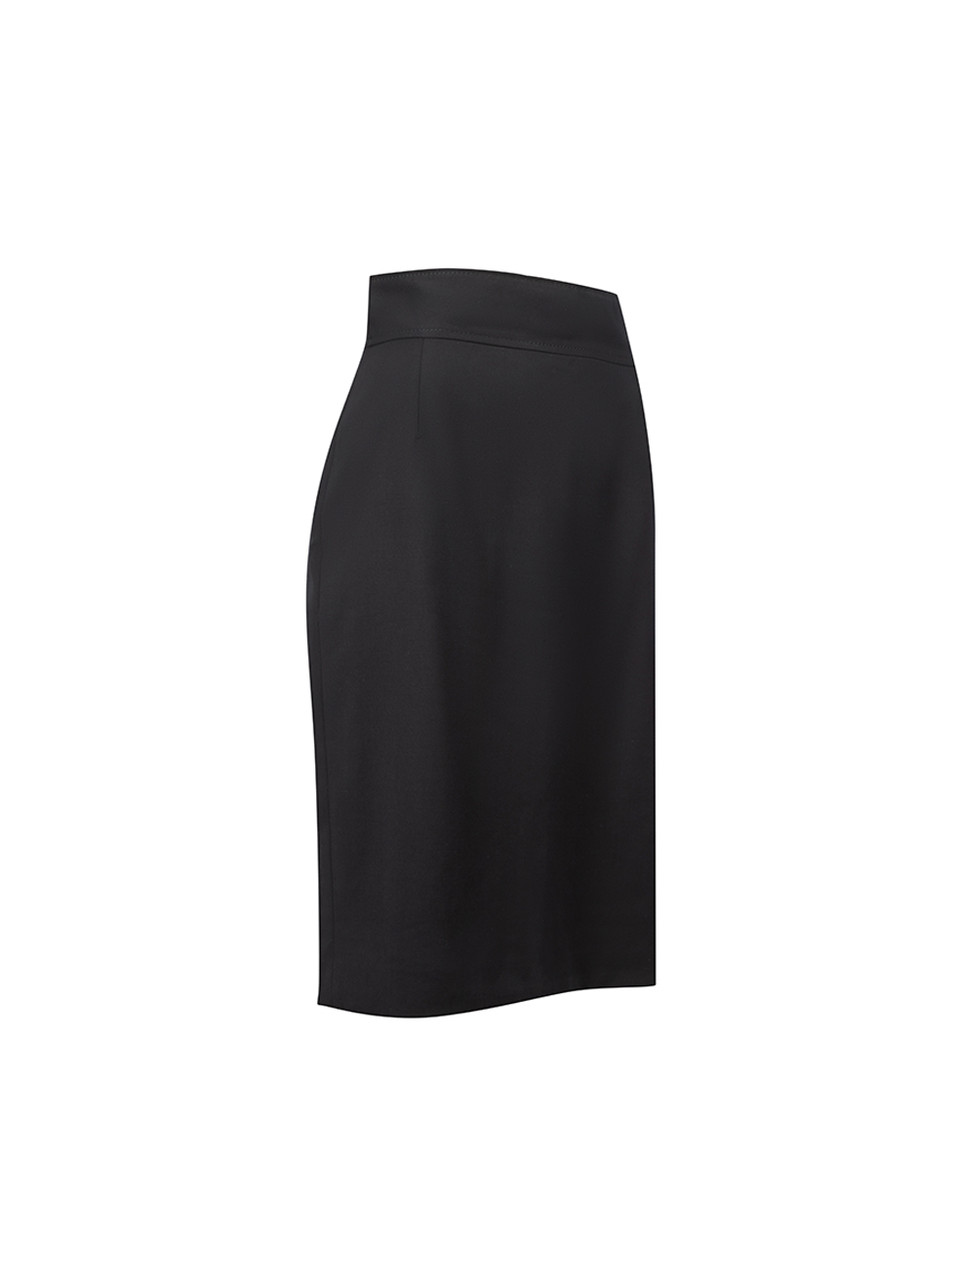 Stella McCartney Black High Rise Mini Skirt